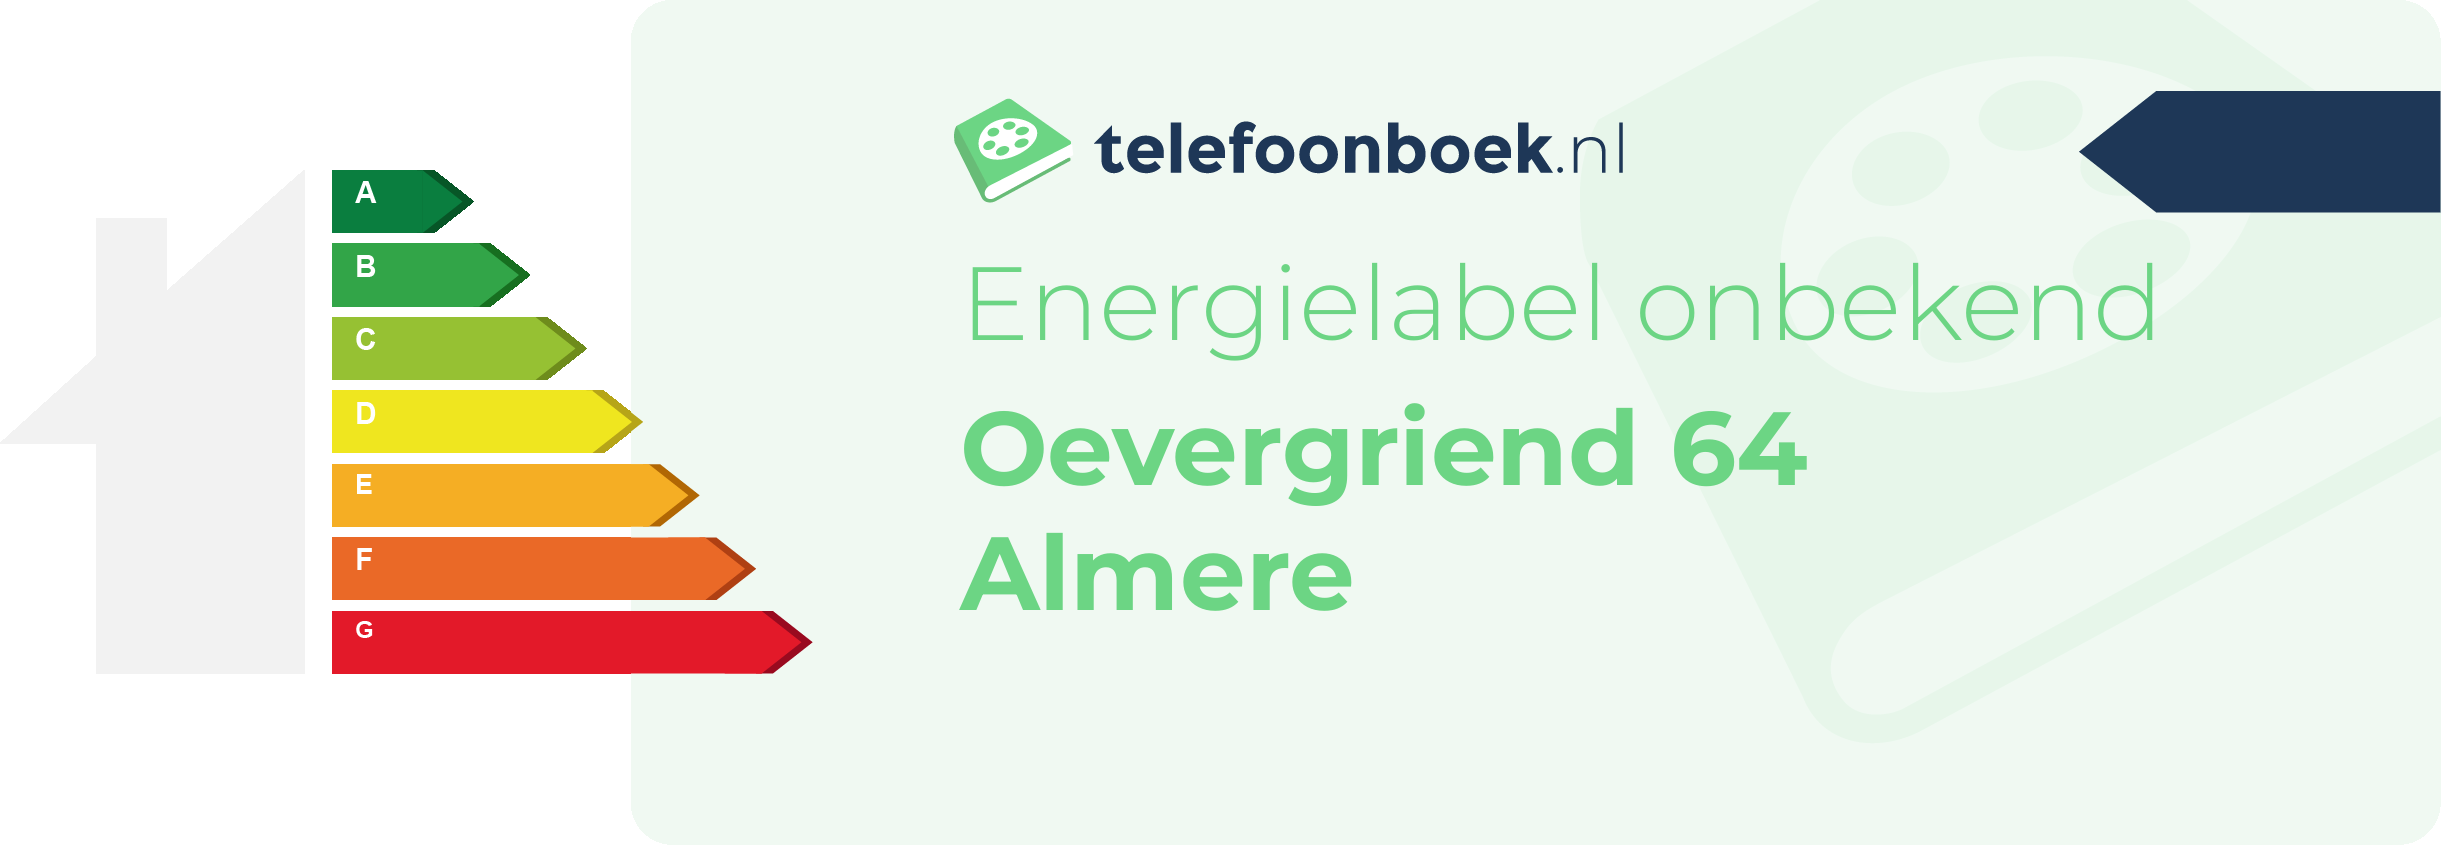 Energielabel Oevergriend 64 Almere